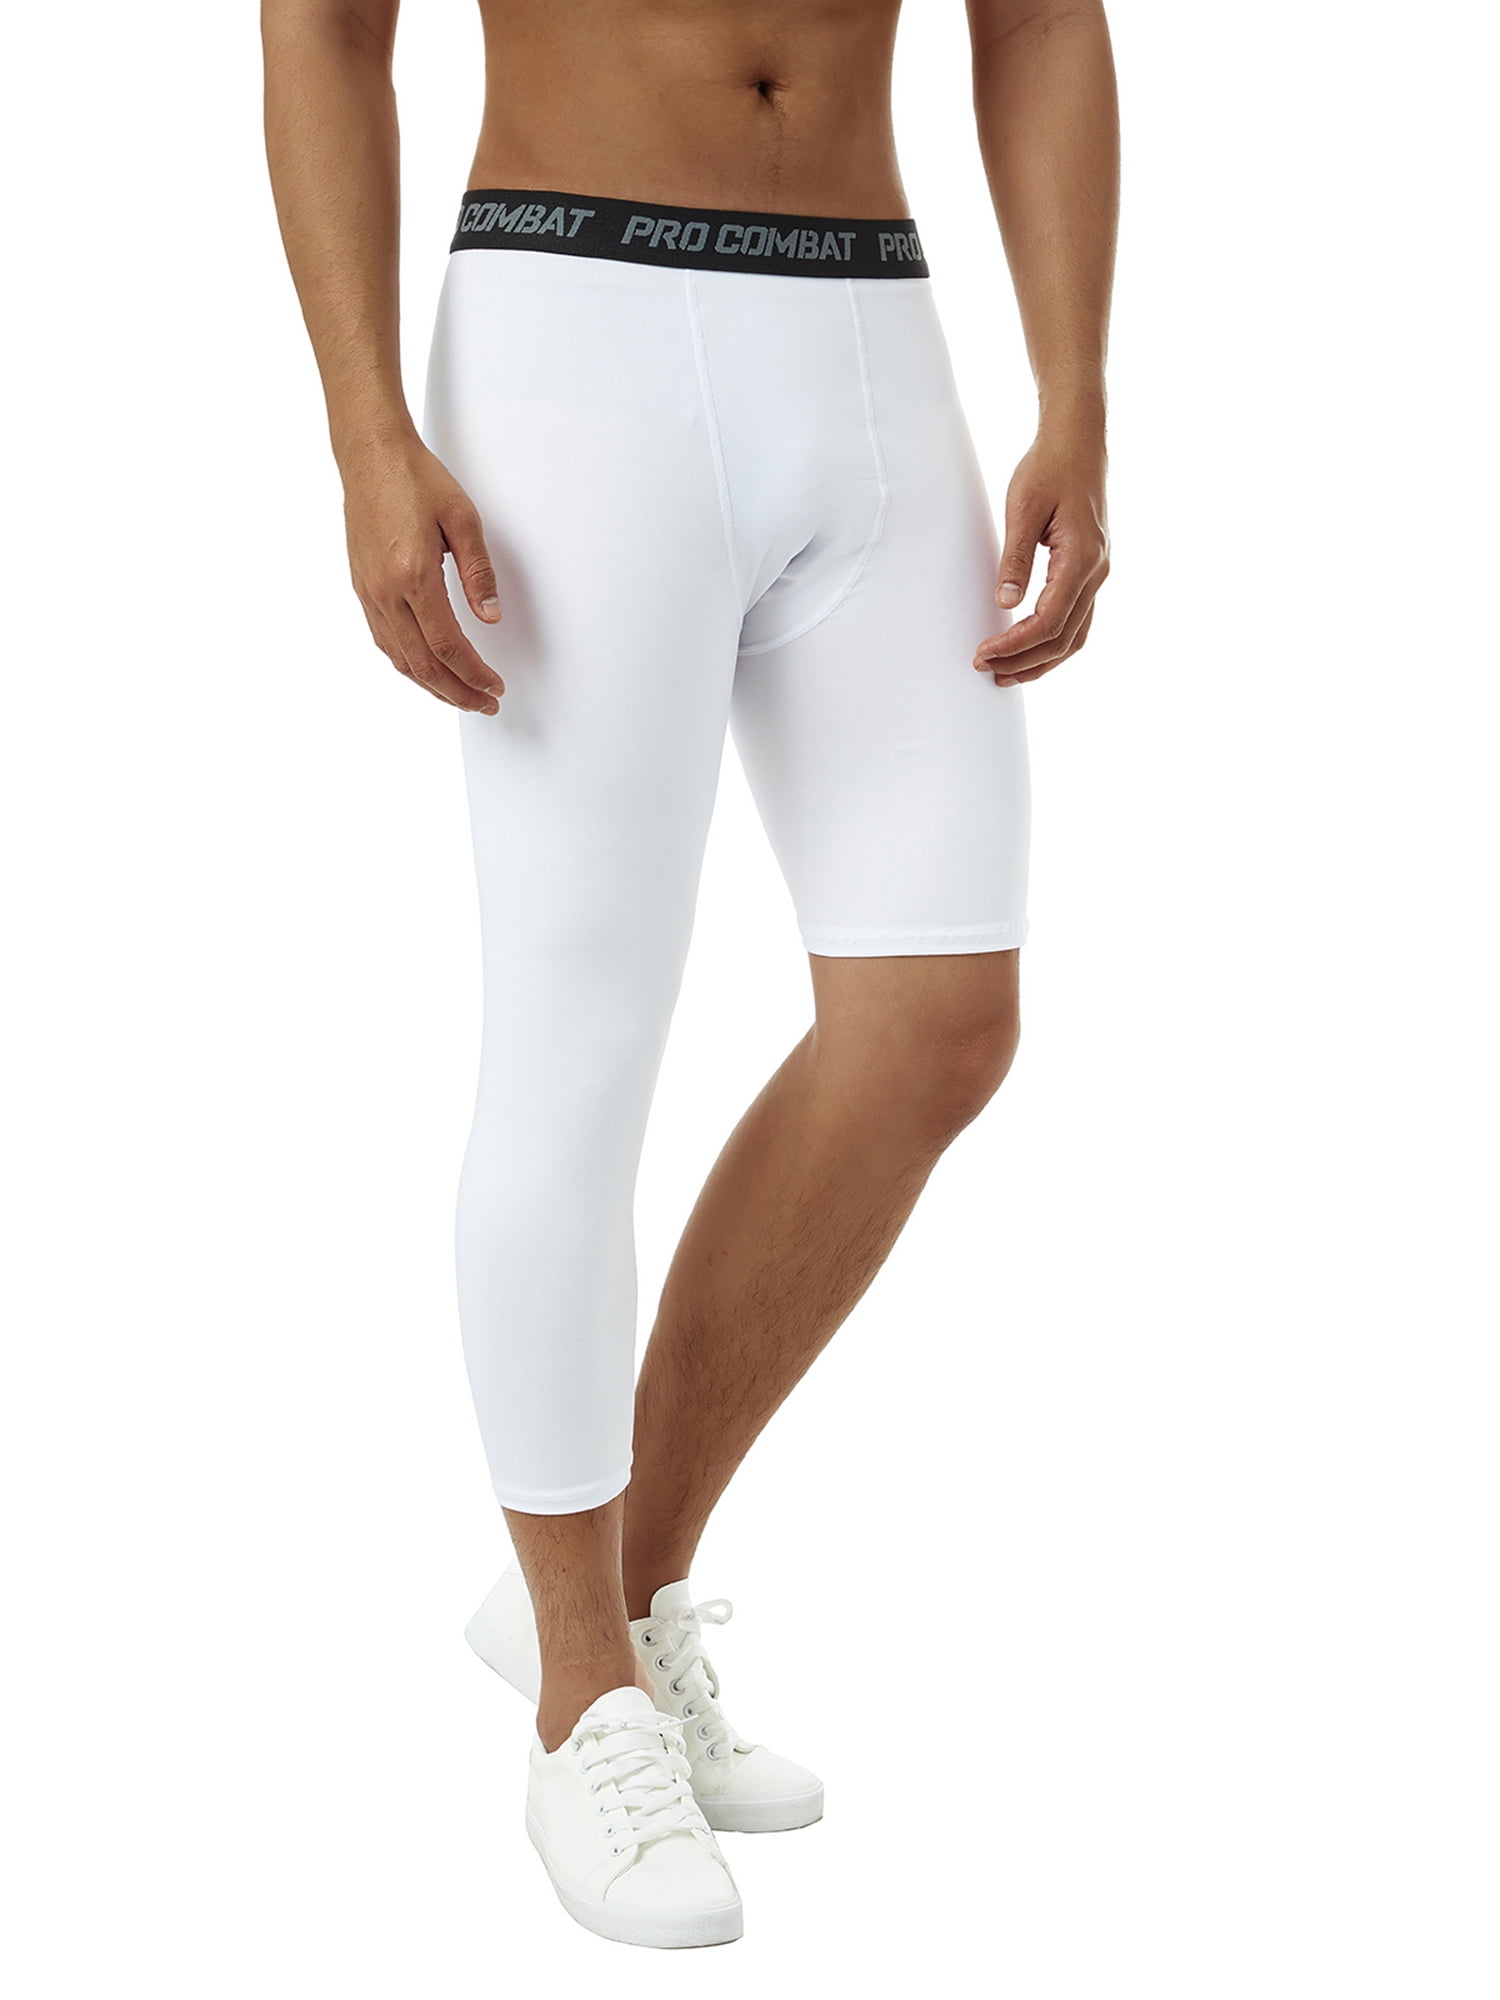 Exclamation point definite heavy Men One Leg Compression Pants 3/4 Capri Tights Athletic Basketball Leggings  Workout Base Layer Underwear - Walmart.com